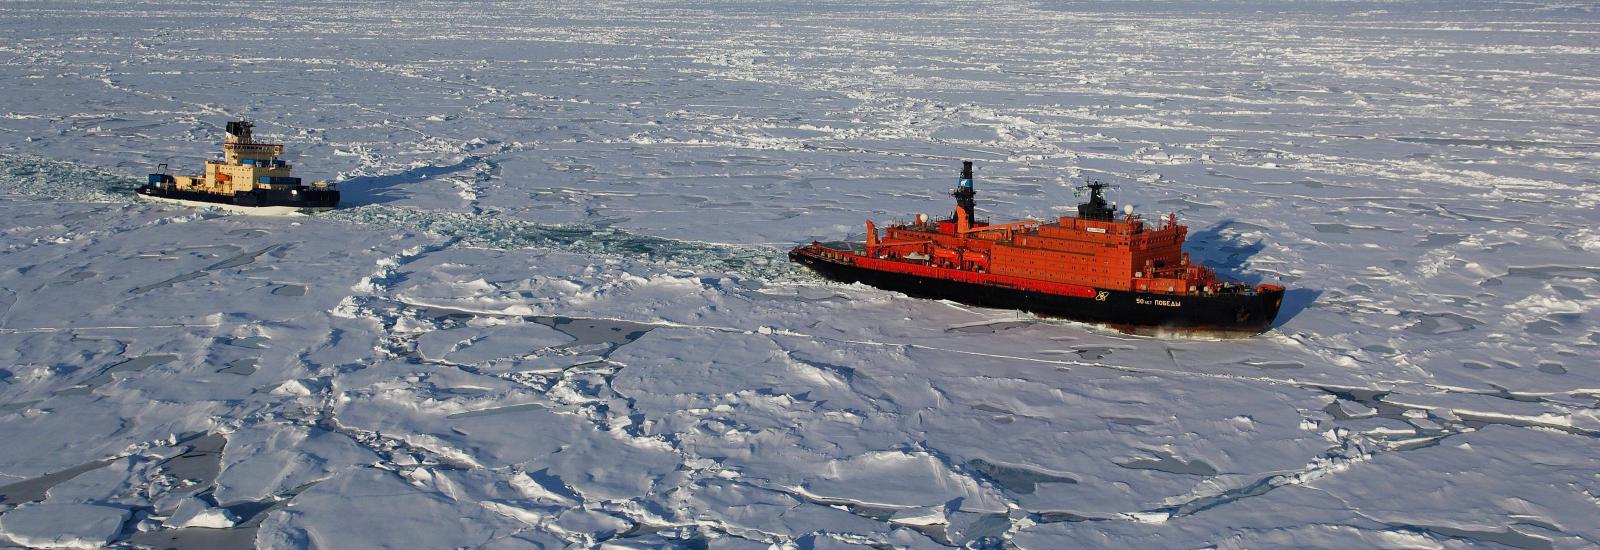 Icebreaker ships in the arctic